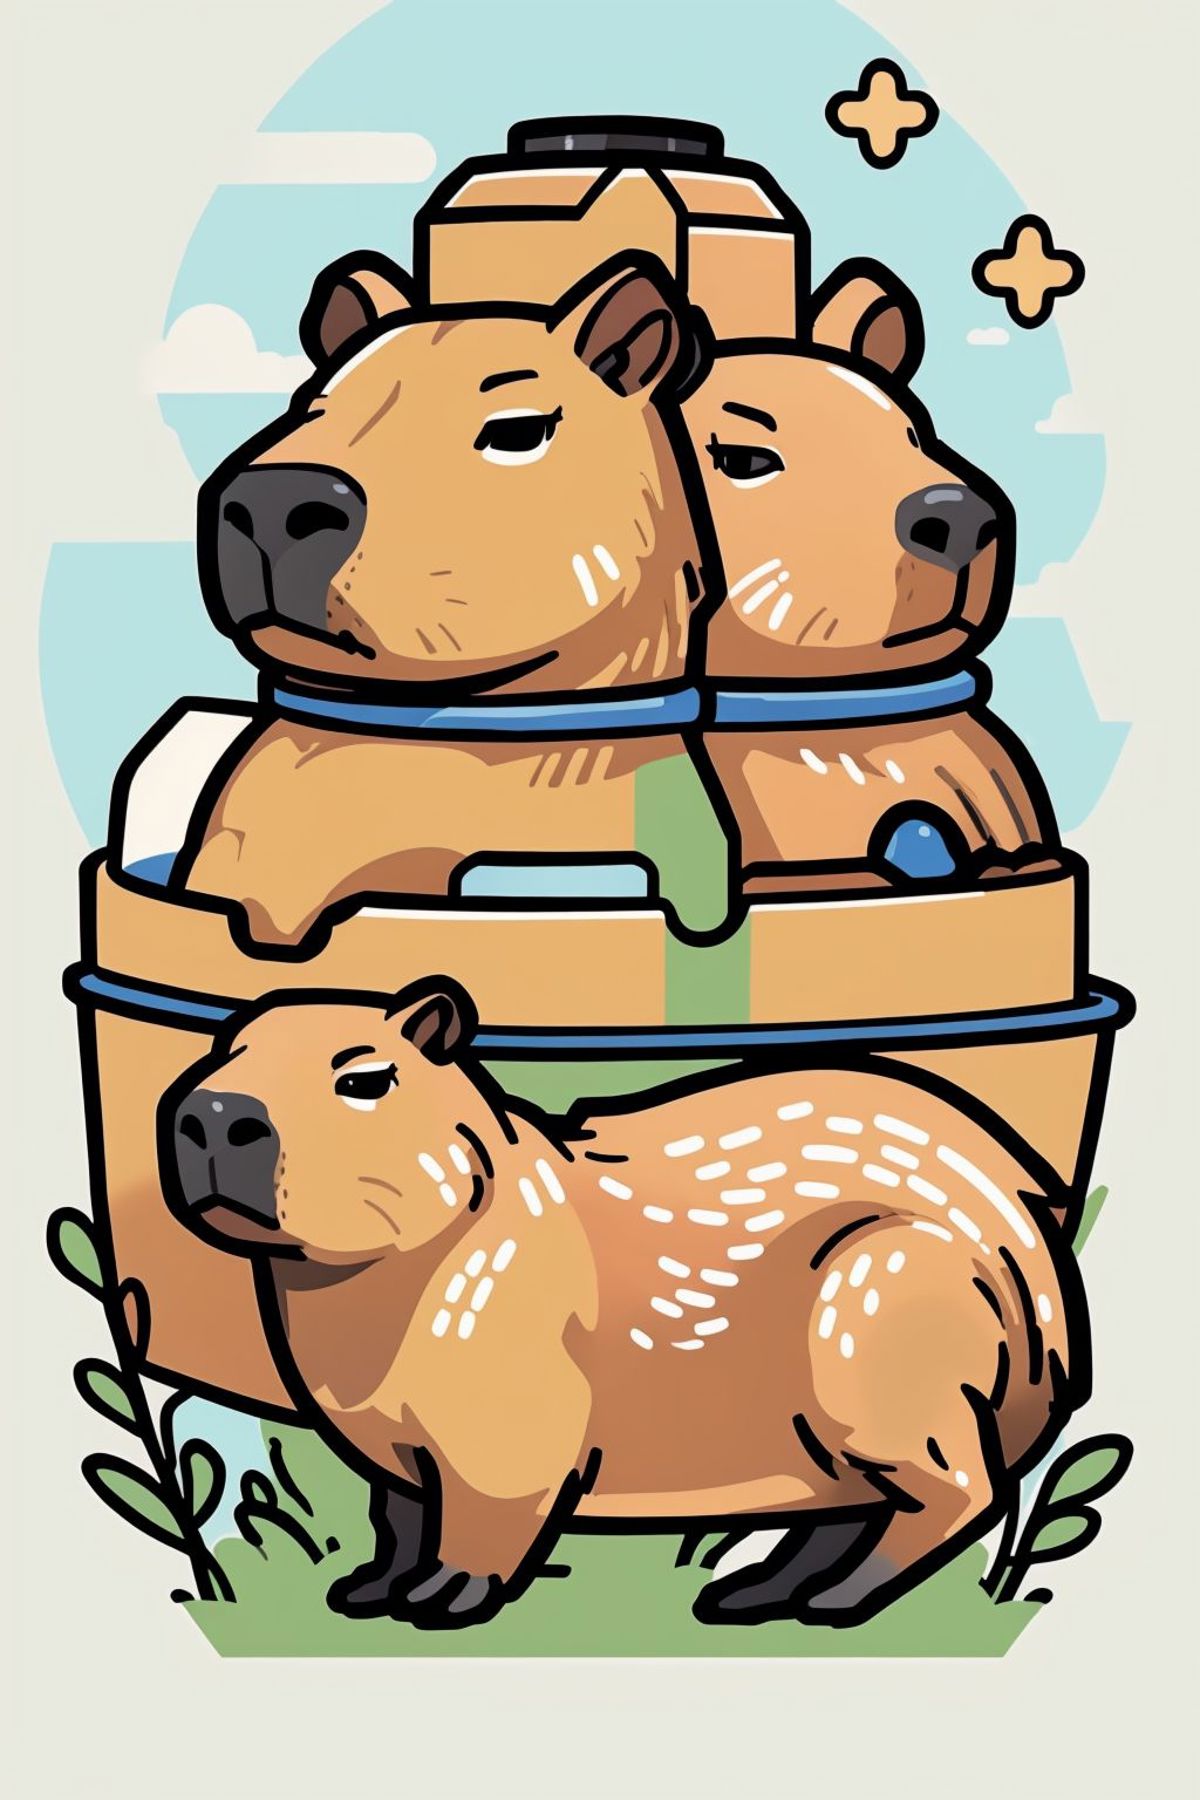 Capybara image by ChaosOrchestrator